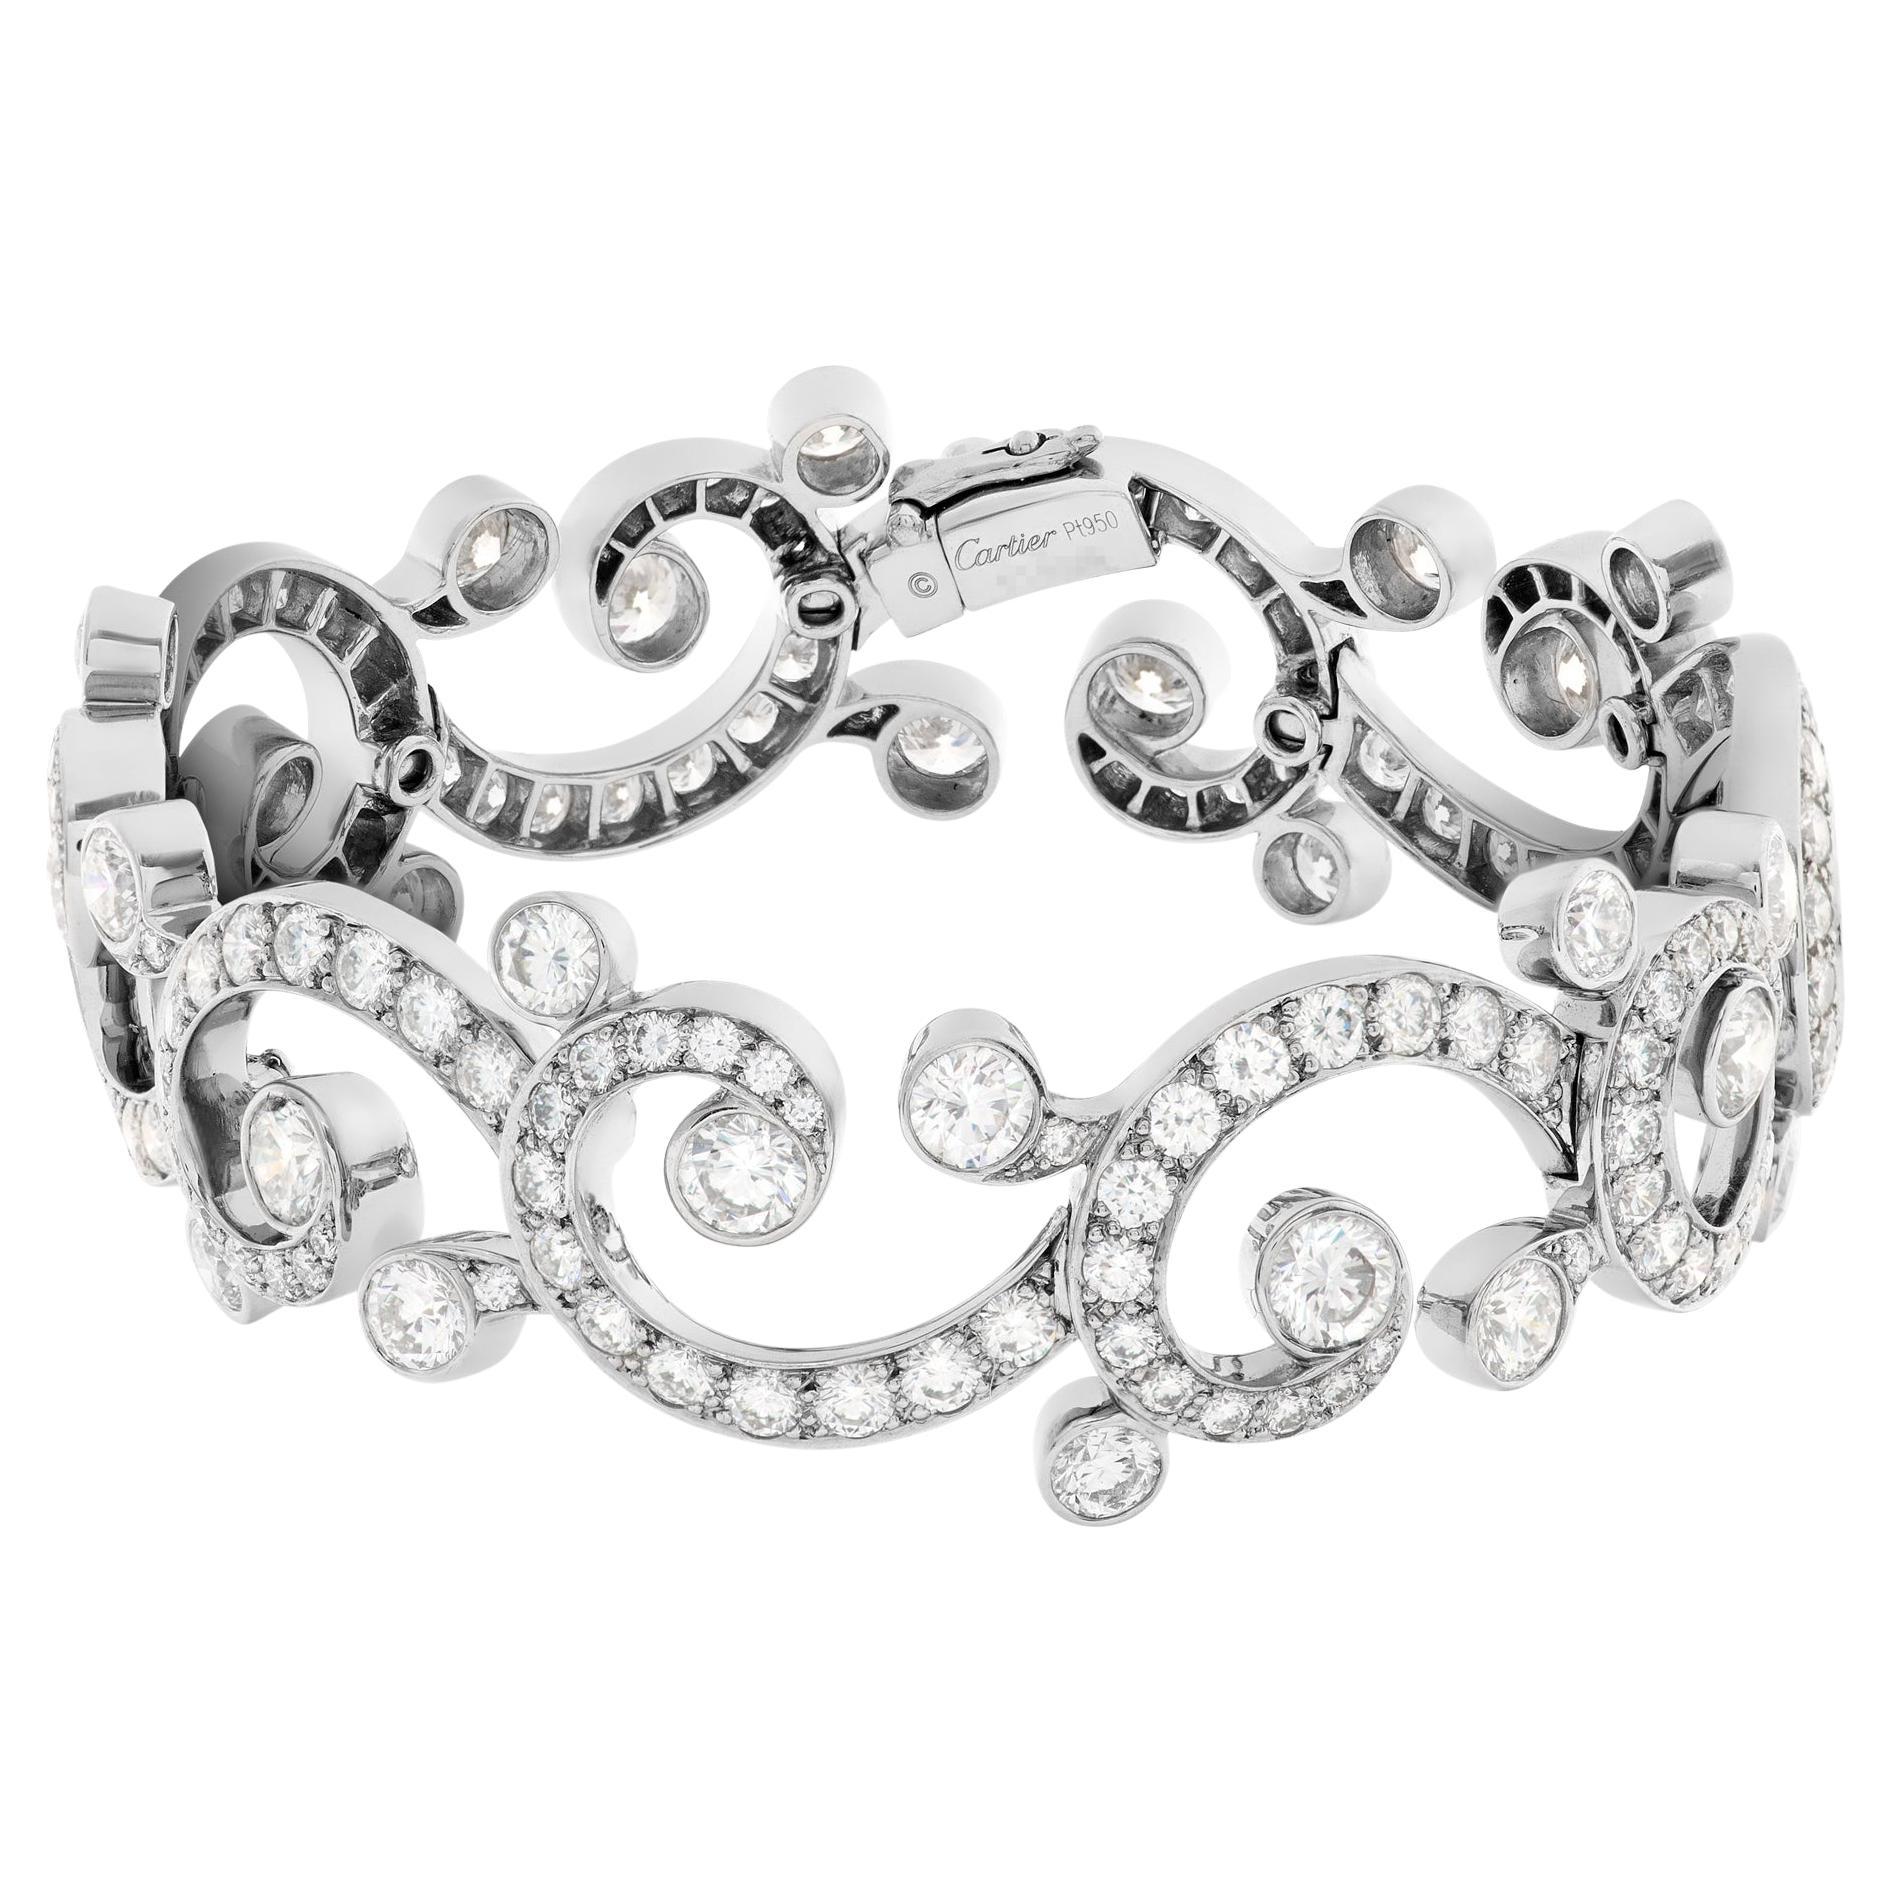 Cartier Diamond Bangle Bracelet in Platinum